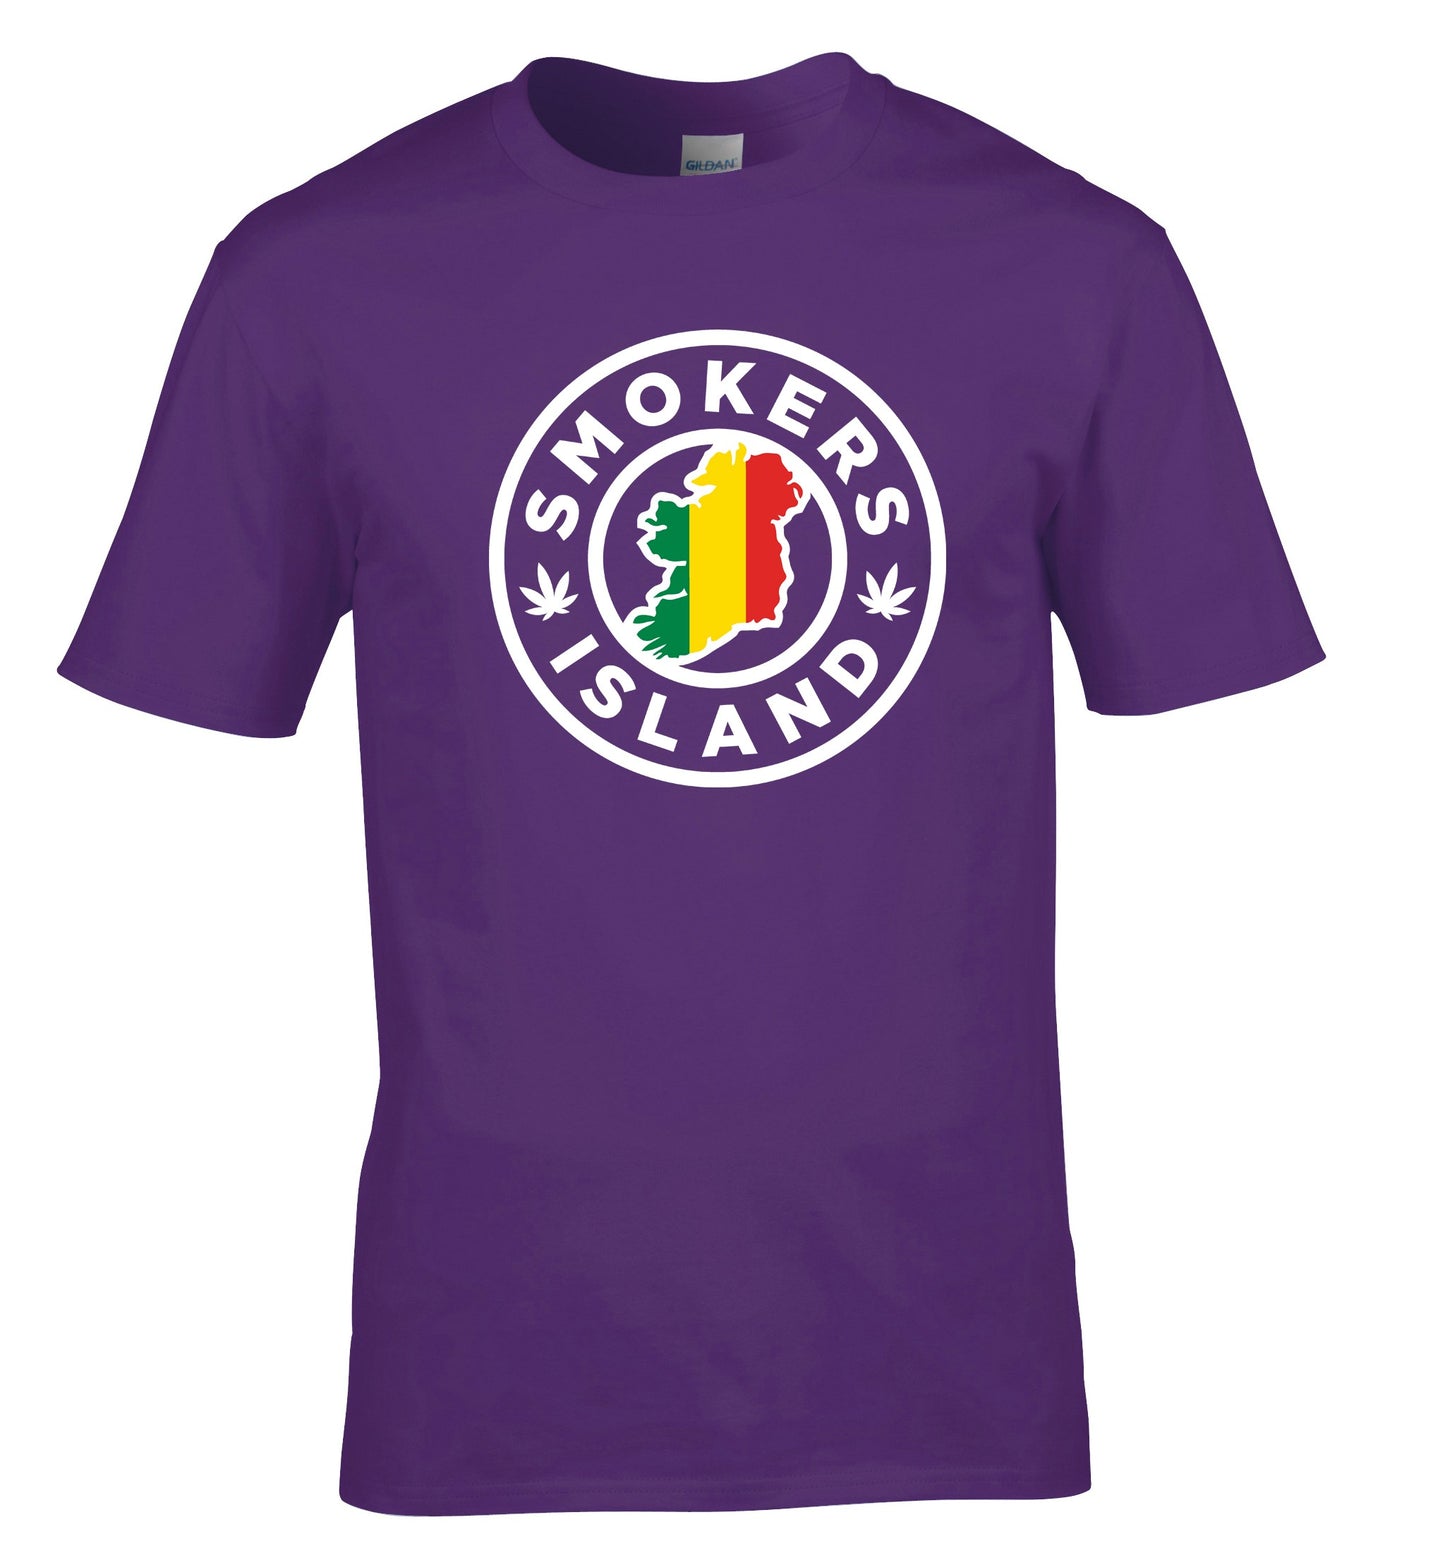 Classic T-Shirt - Smokers Island (Purple)